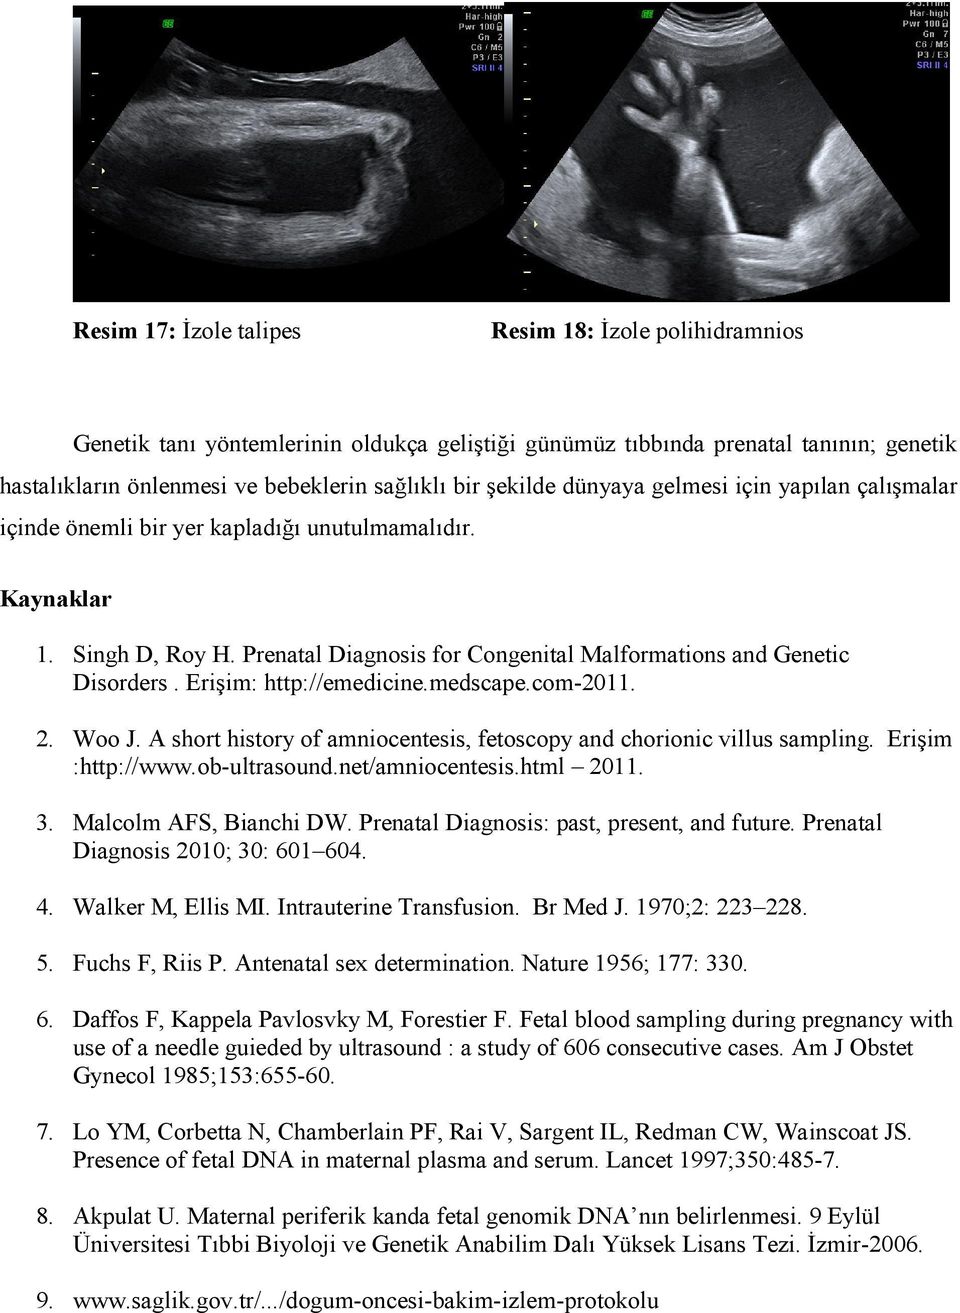 Erişim: http://emedicine.medscape.com-2011. 2. Woo J. A short history of amniocentesis, fetoscopy and chorionic villus sampling. Erişim :http://www.ob-ultrasound.net/amniocentesis.html 2011. 3.